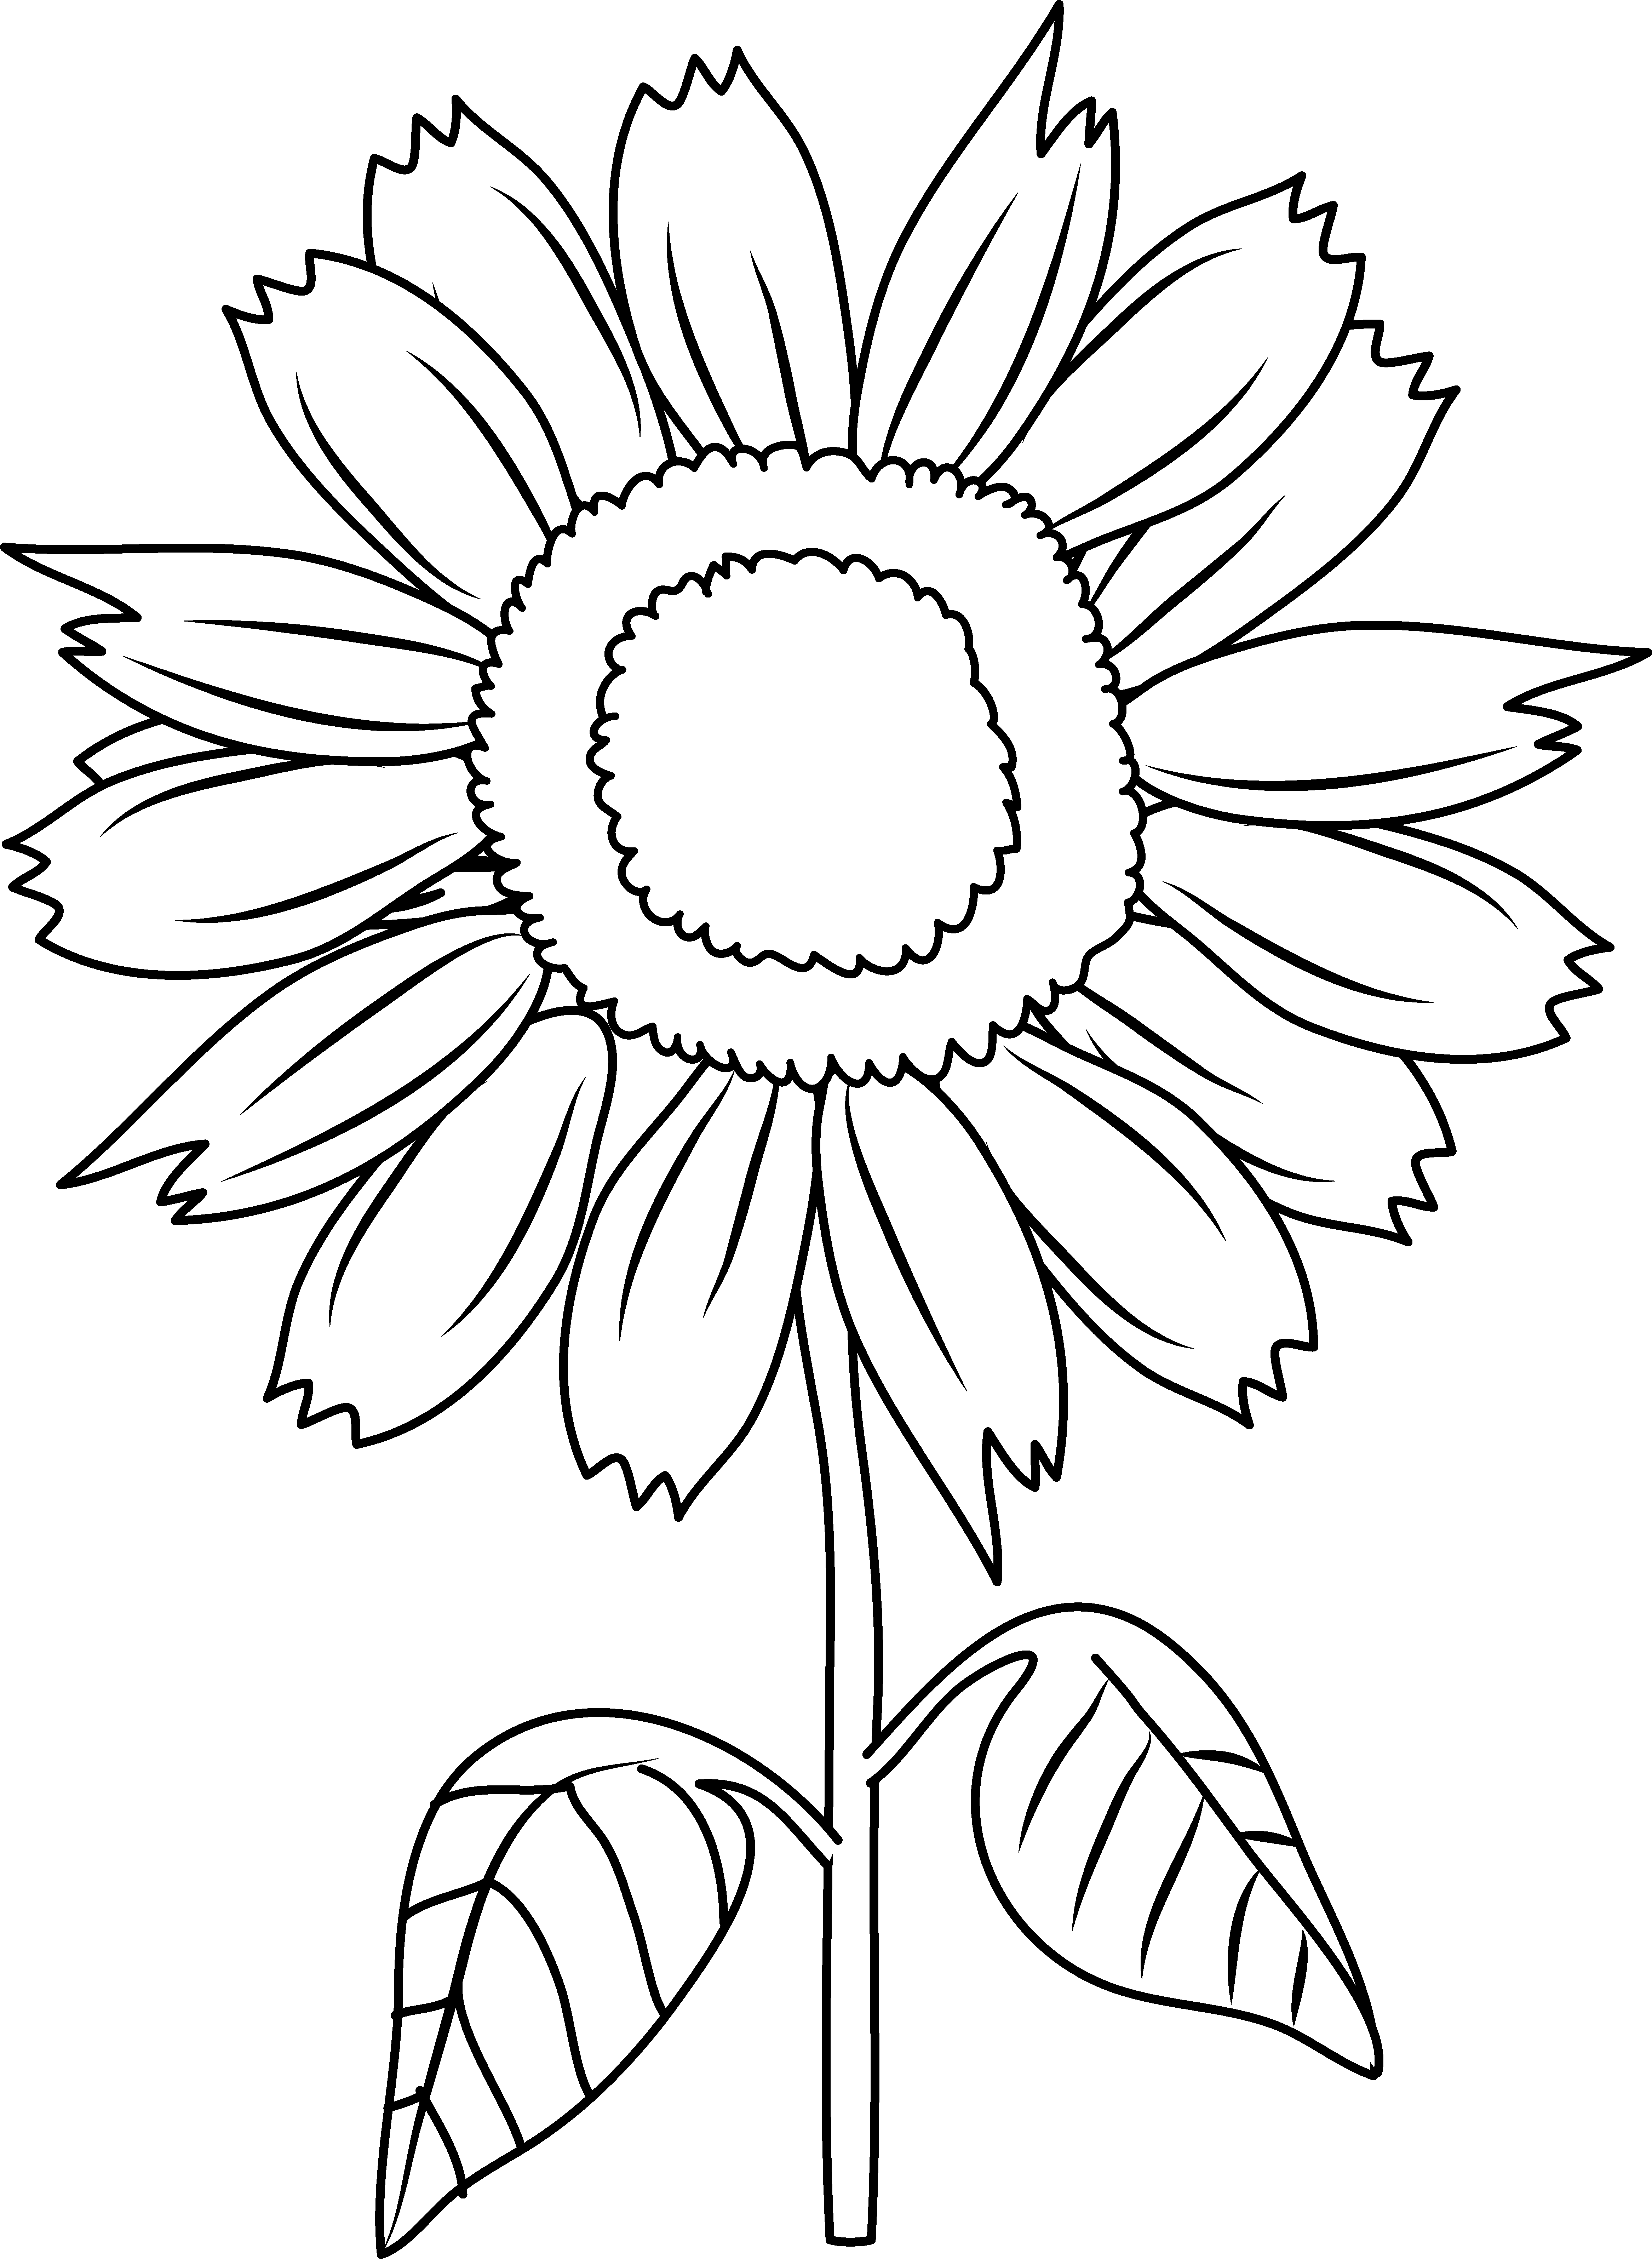 free-sunflower-line-art-download-free-sunflower-line-art-png-images